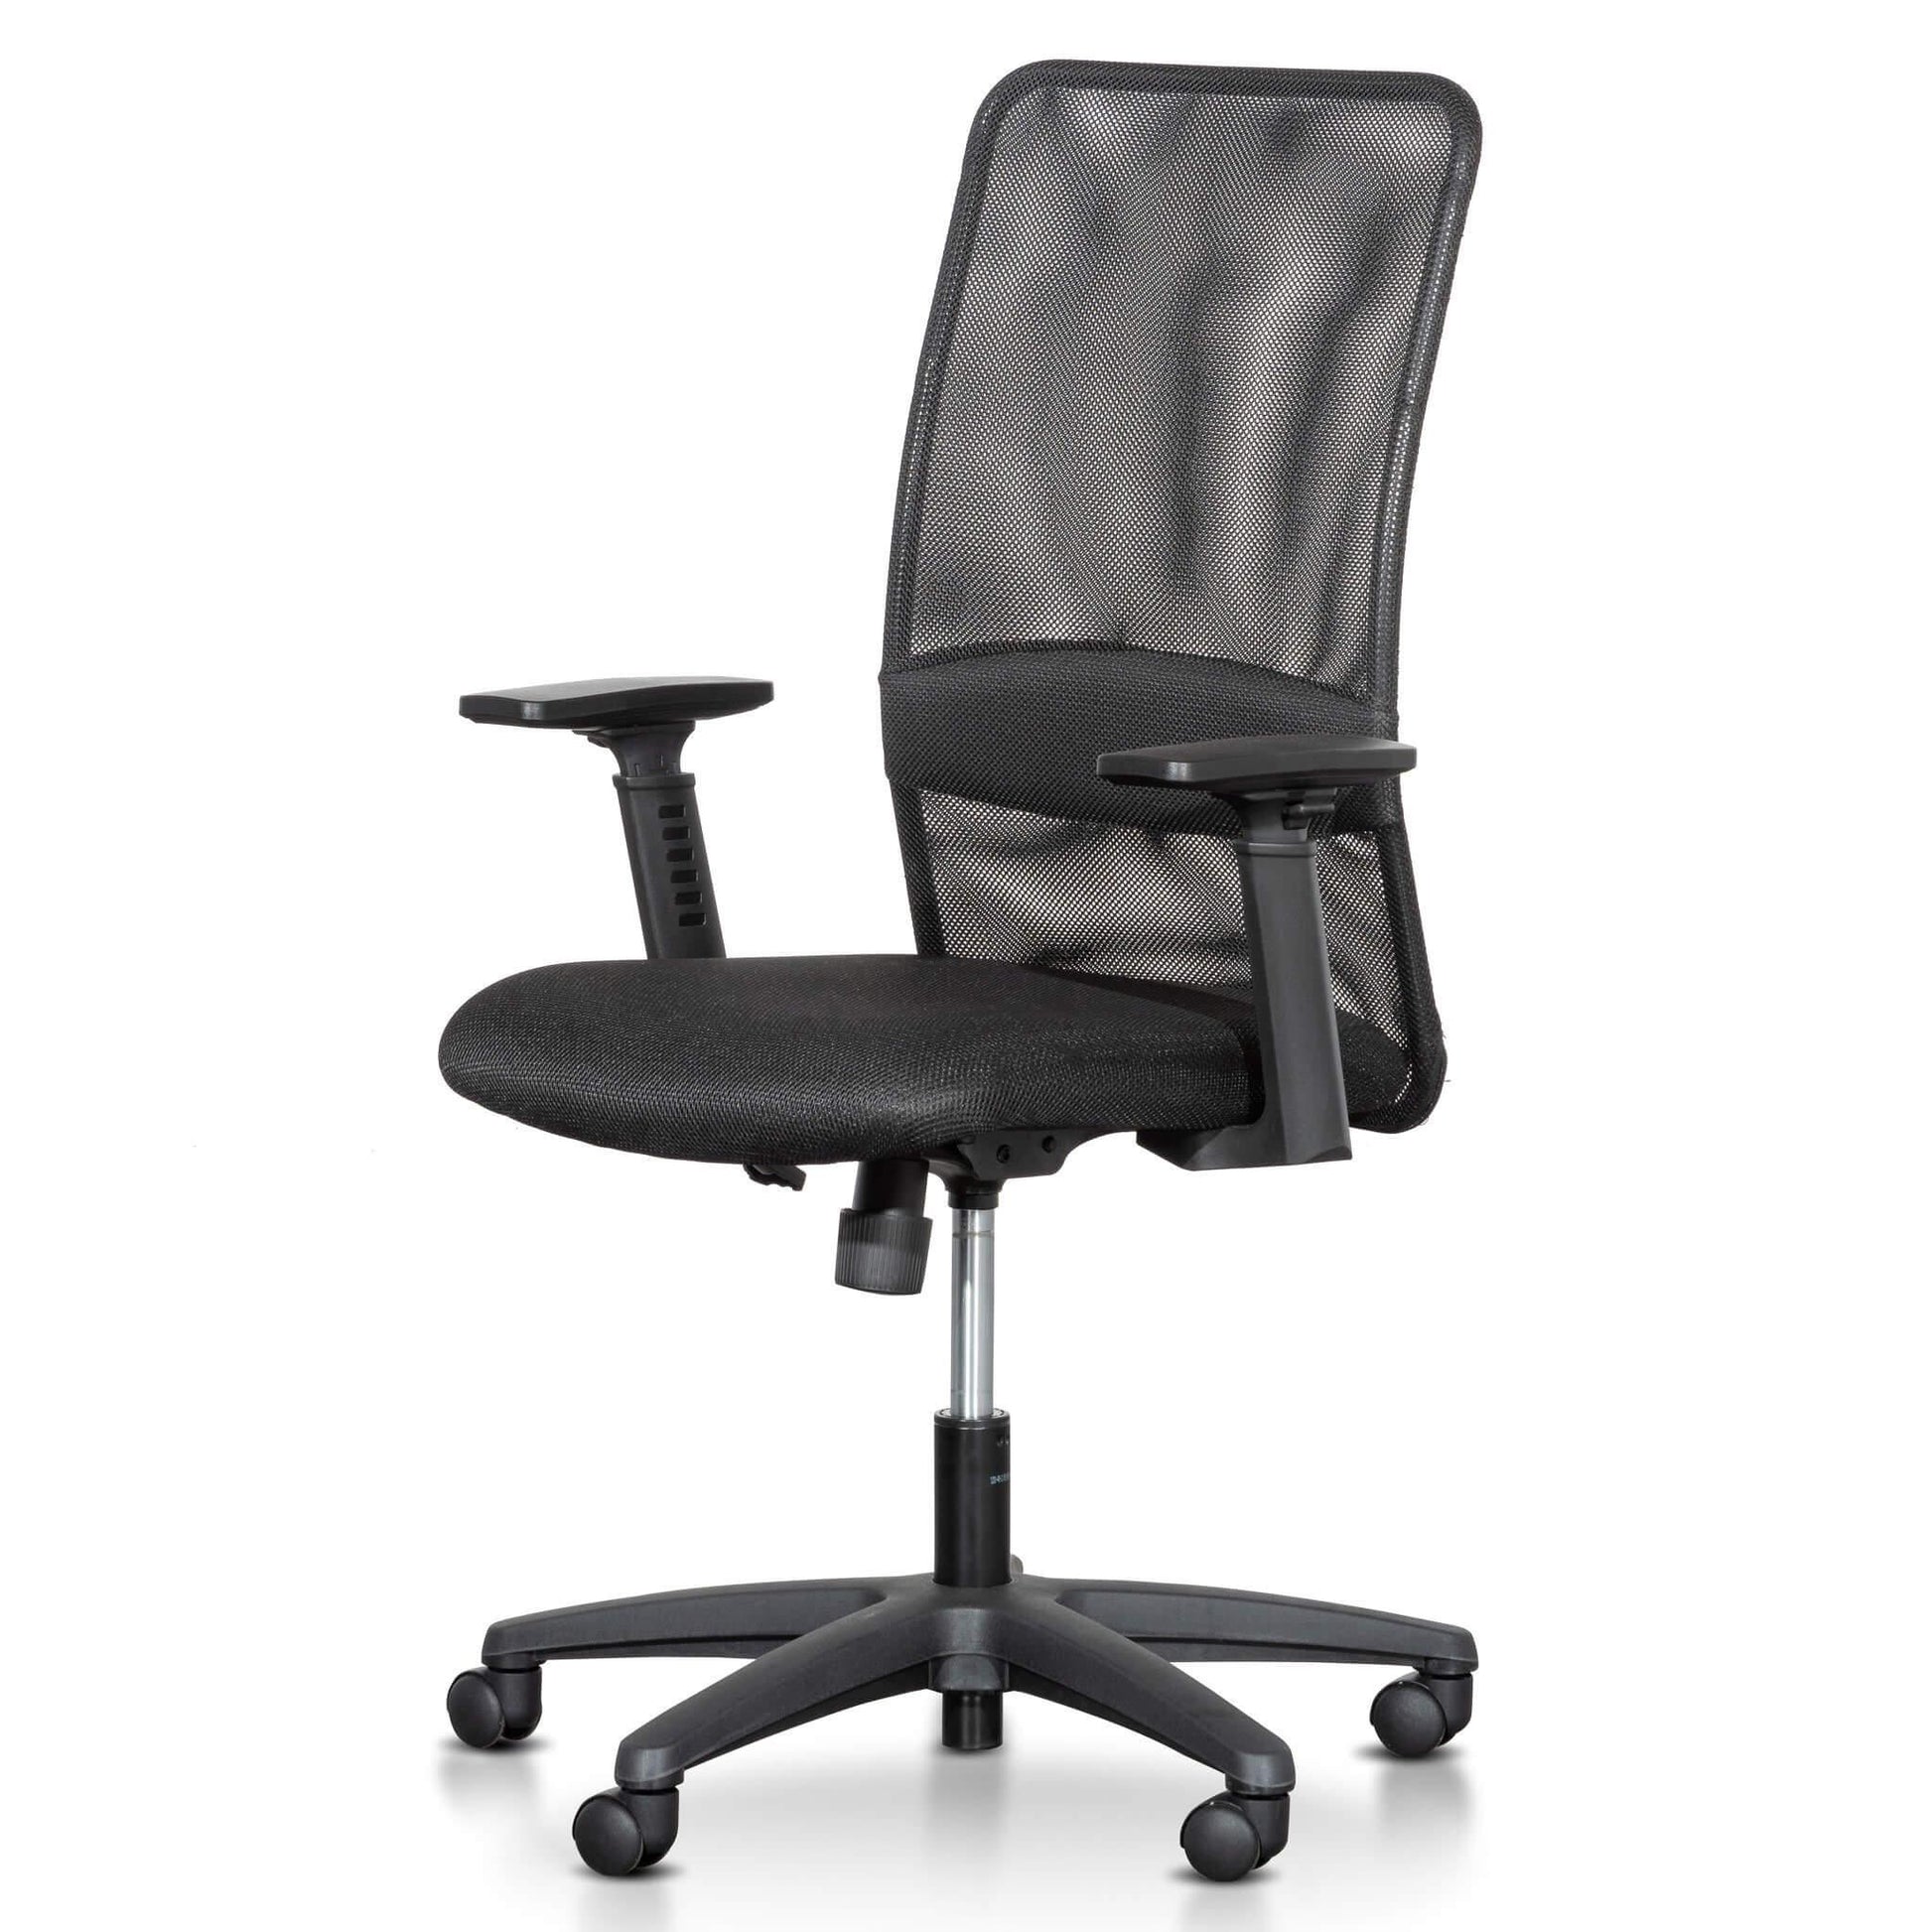 Calibre Mesh Office Chair - Black OC6240-UN - Office/Gaming ChairsOC6240-UN 2